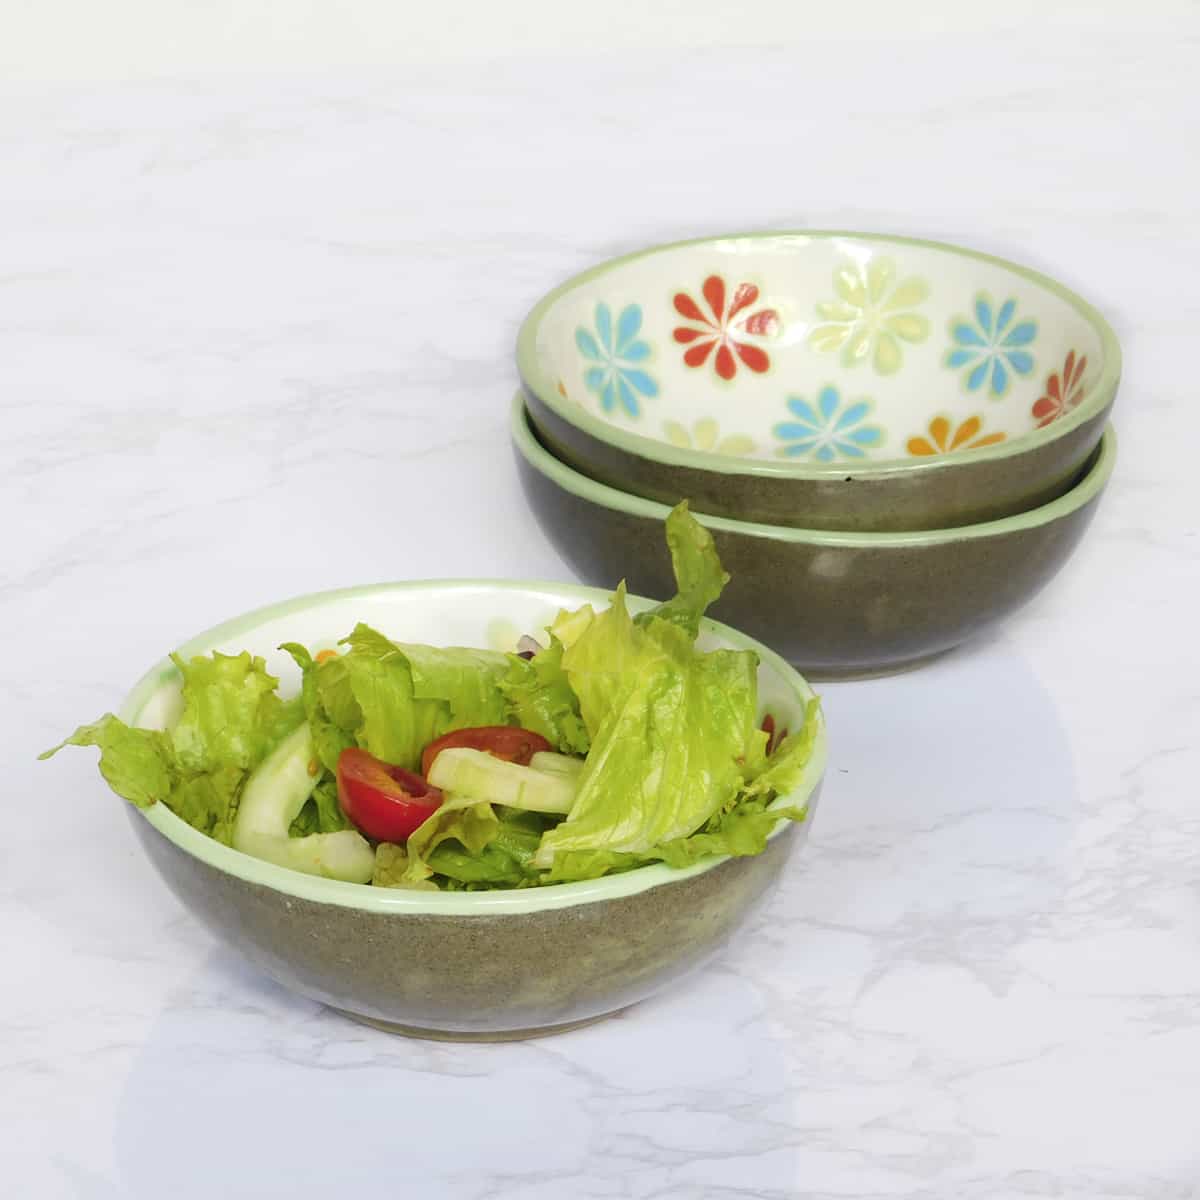 Handmade Ceramic Bowls Green Floral Design Set of 4 - Medium